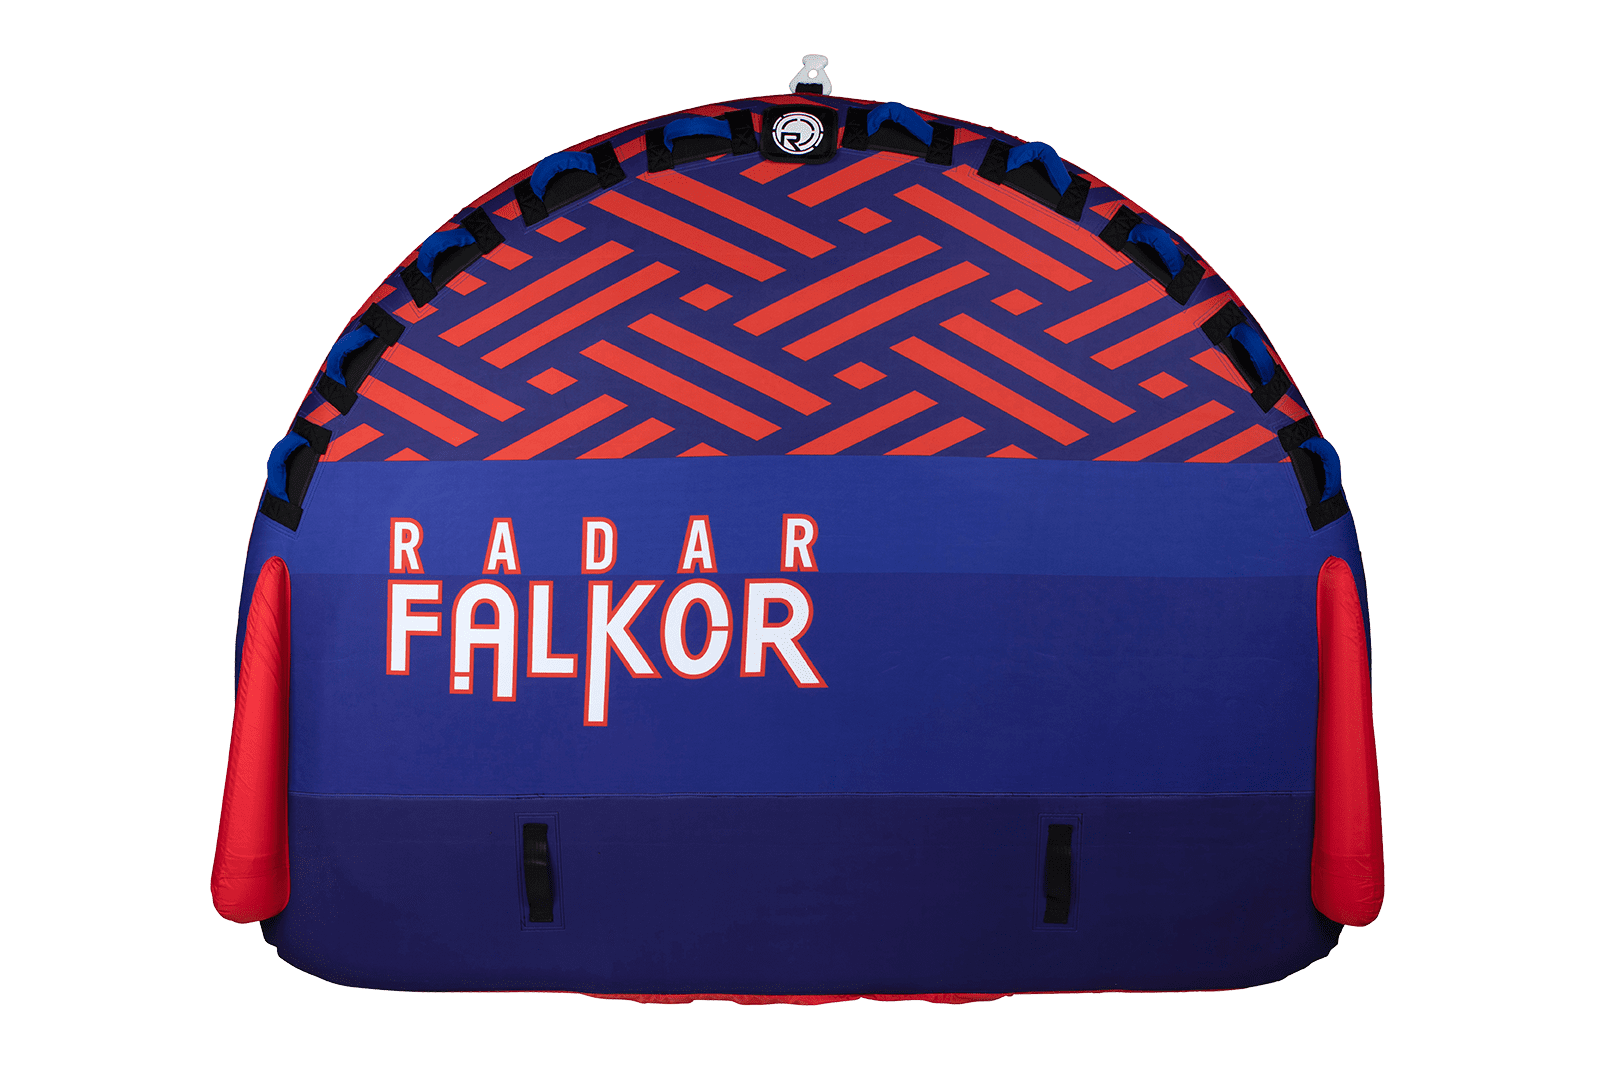 Radar Falkor 4 Soft Top Towable Tube